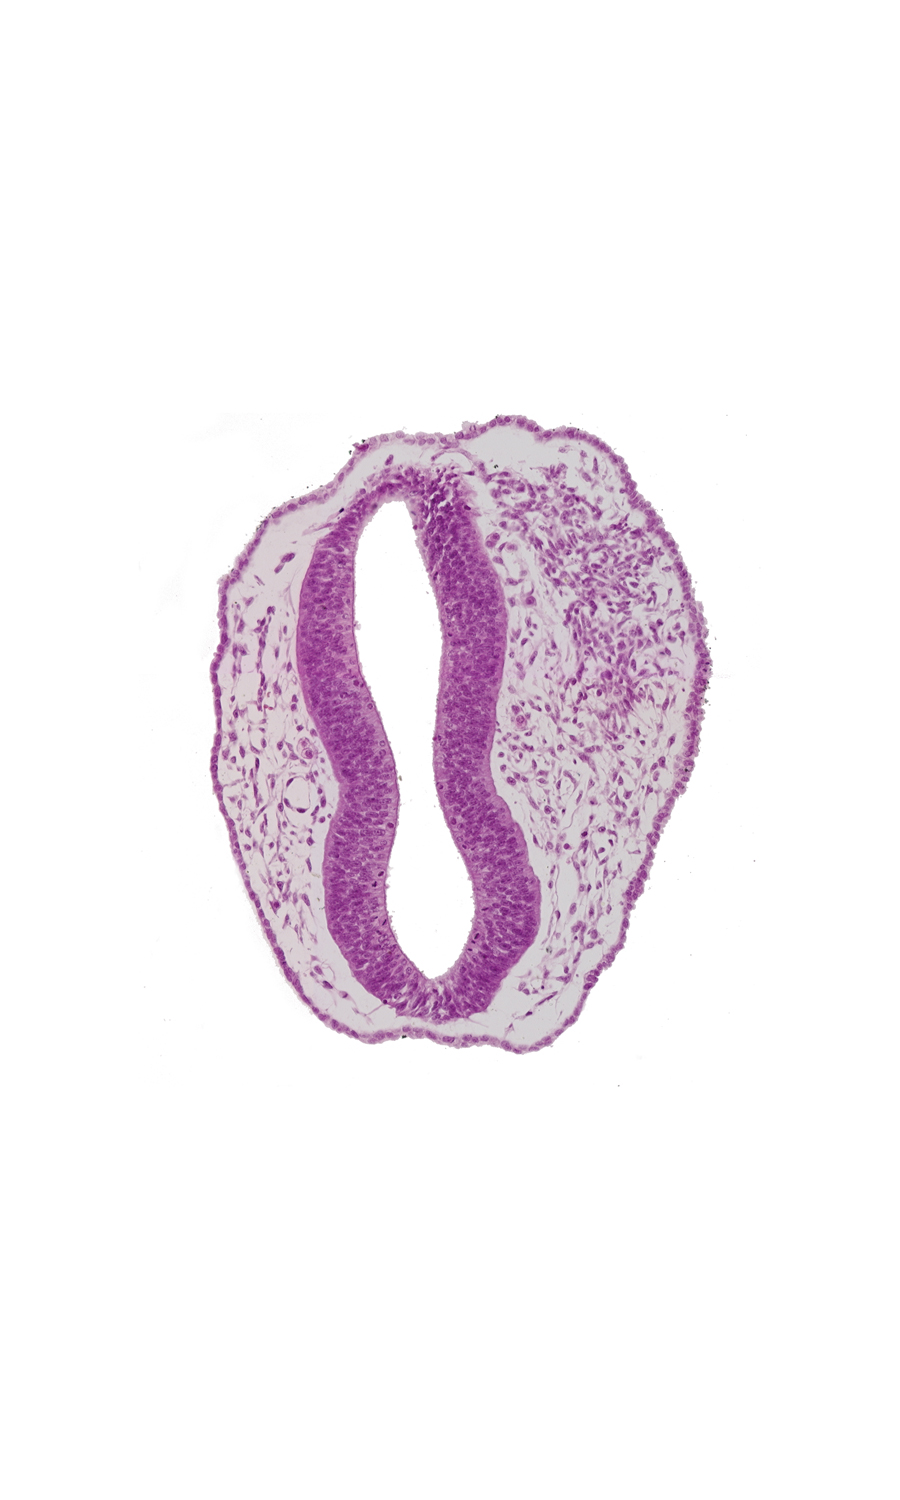 blood vessel(s), head mesenchyme, mesencephalon (M2), mesencoel, rhombencephalon (Rh. 1), rhombencoel (fourth ventricle), sulcus limitans, surface ectoderm, trigeminal neural crest (CN V)